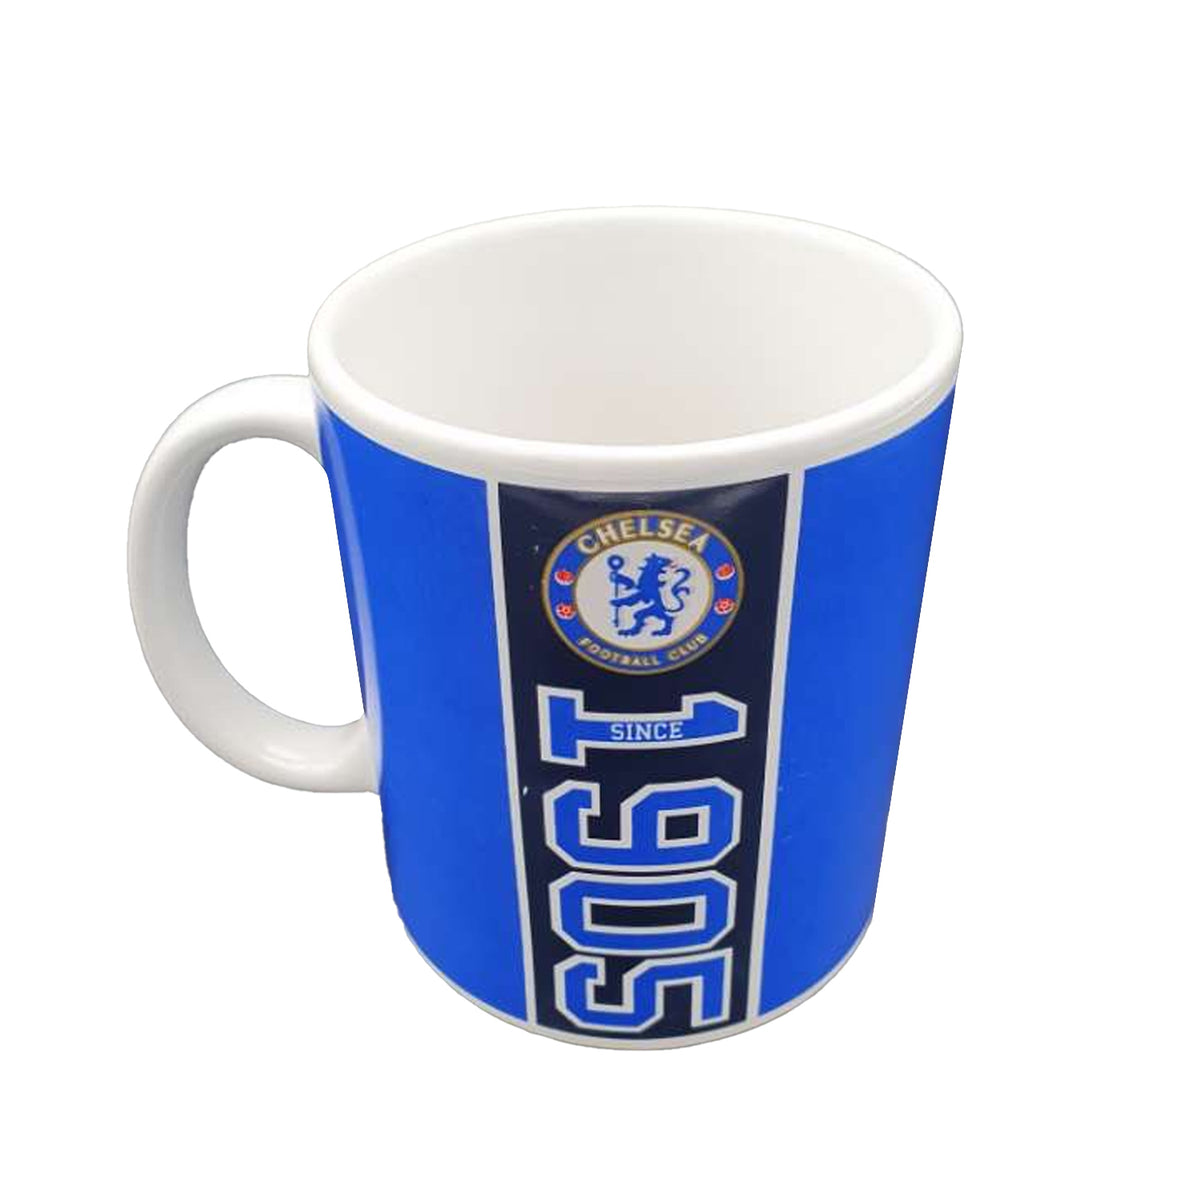 Chelsea FC Since 1905 Mug